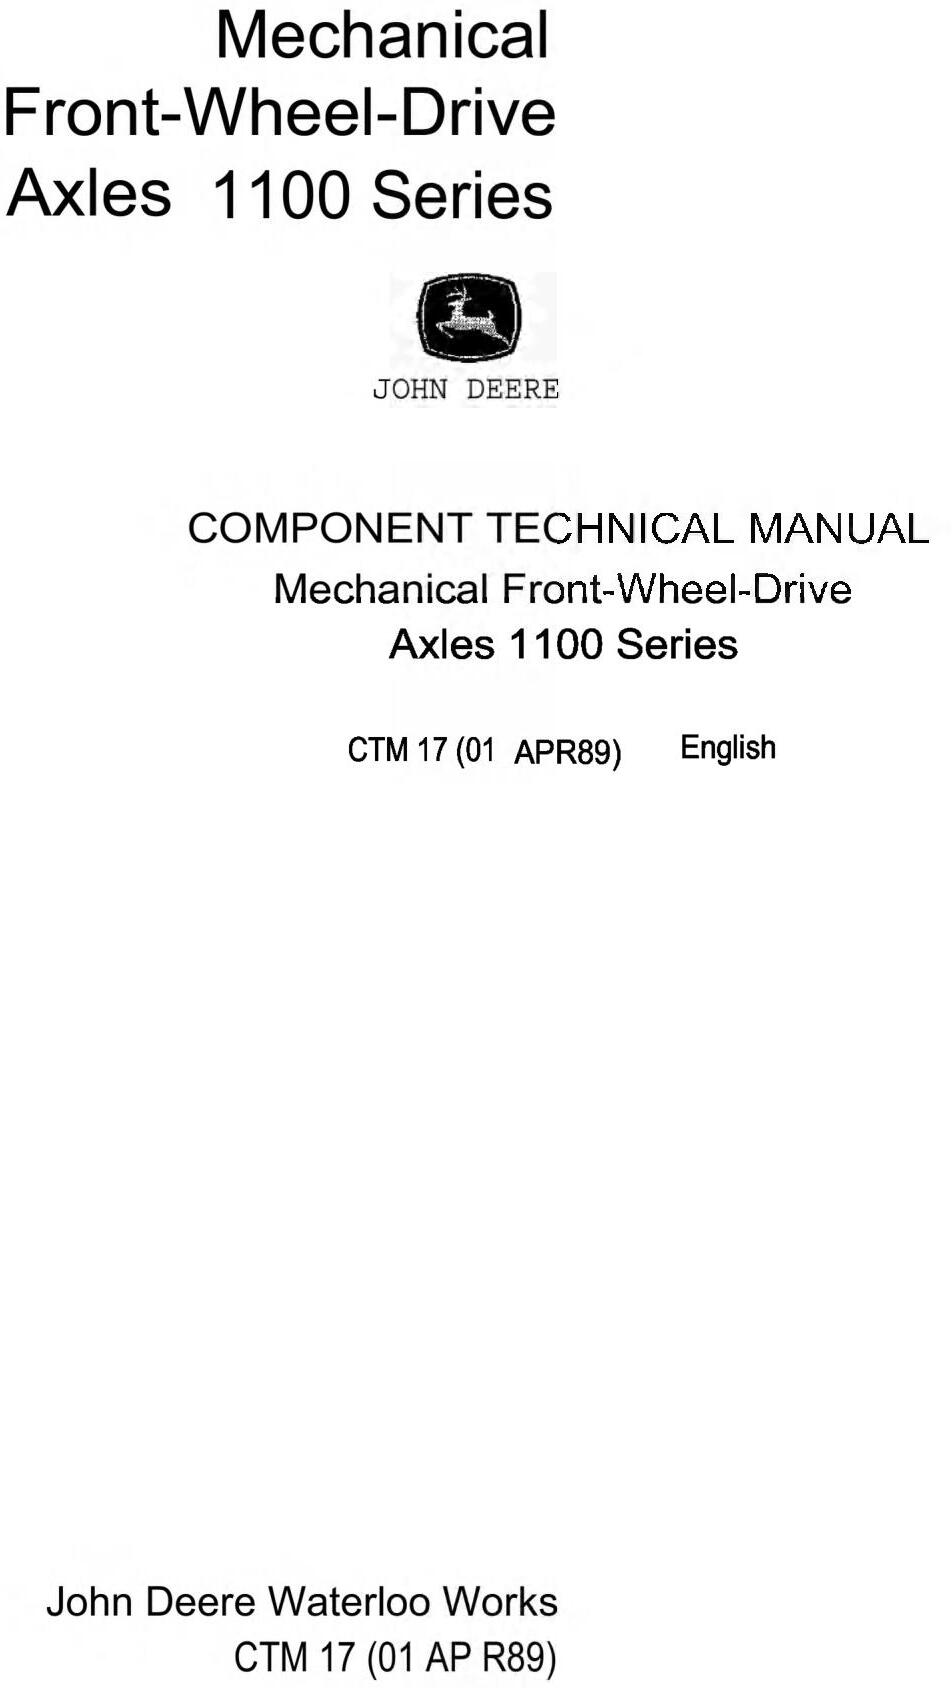 John Deere 1100 Series Mechanical Front Wheel Drive Axles Component Technical Manual CTM17